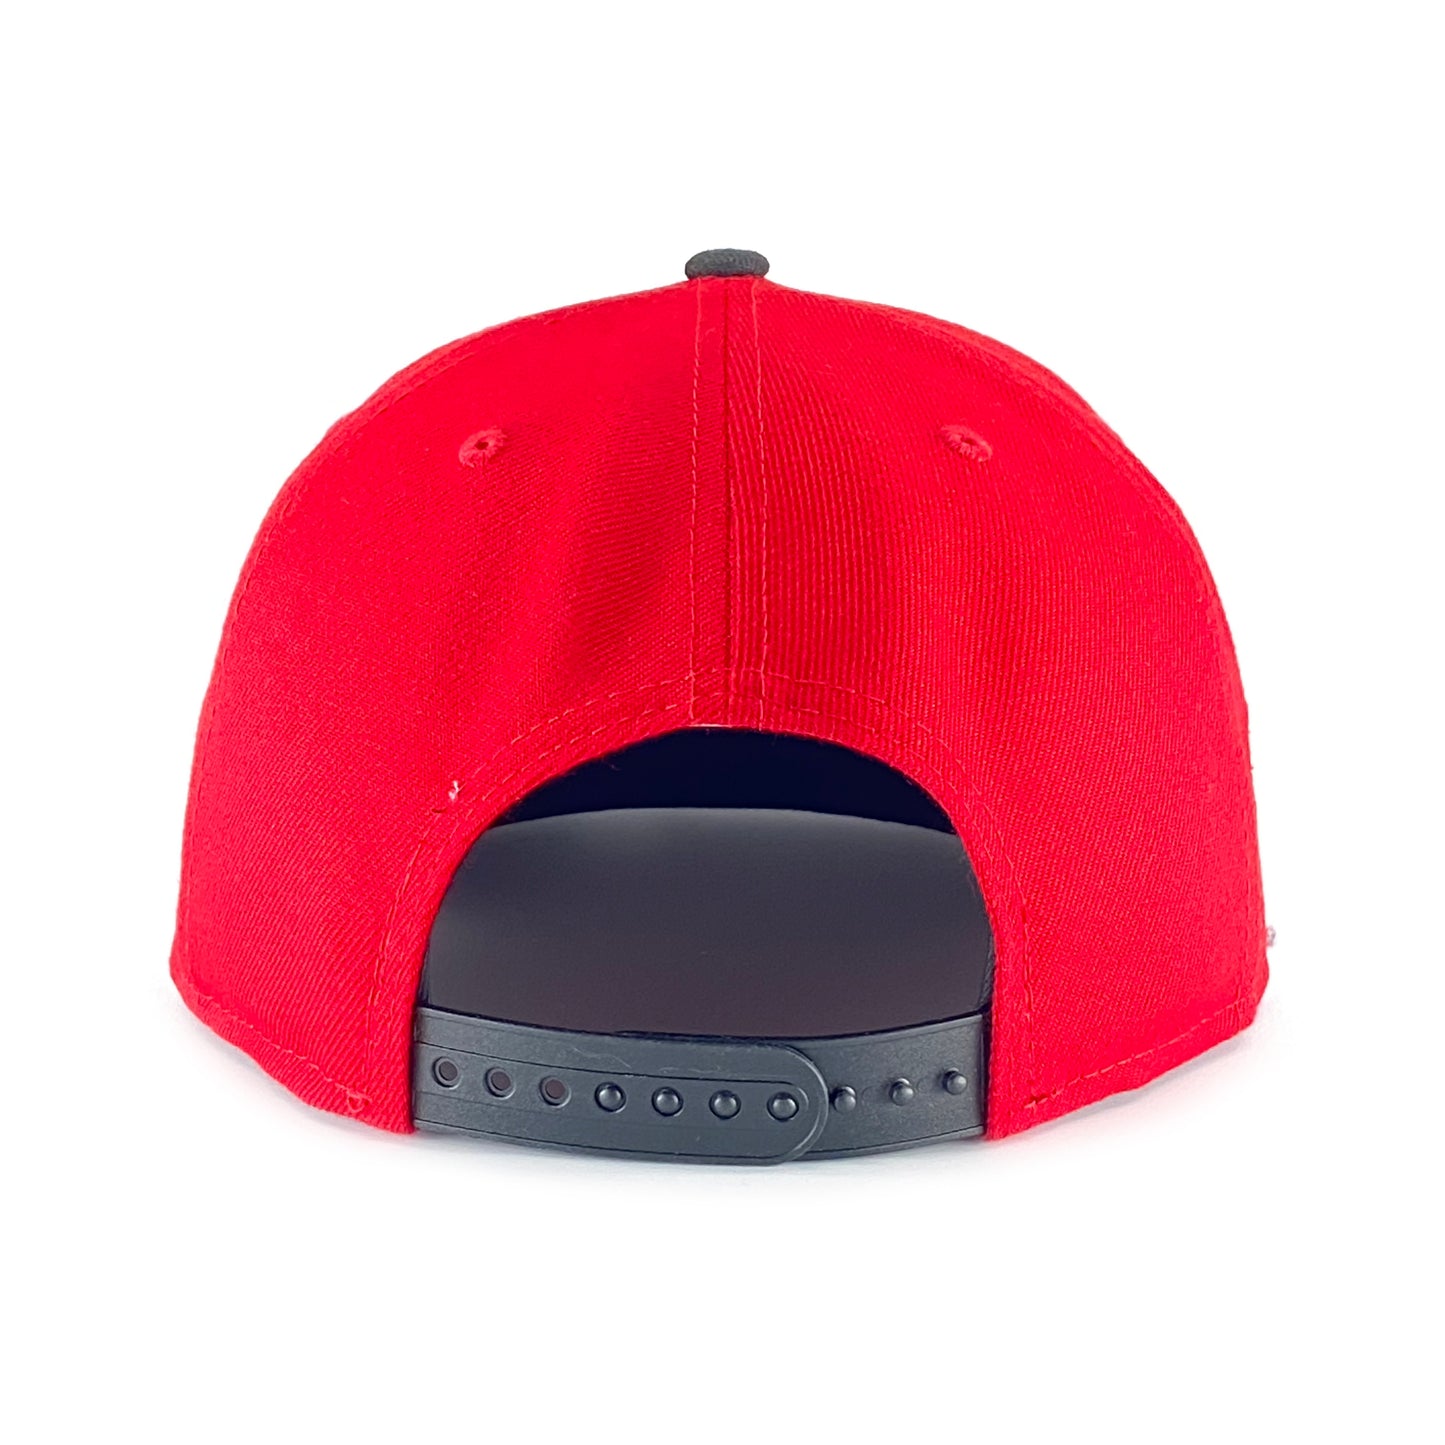 Chicago Bulls Chase Script Red/Black New Era 9FIFTY Snapback Hat